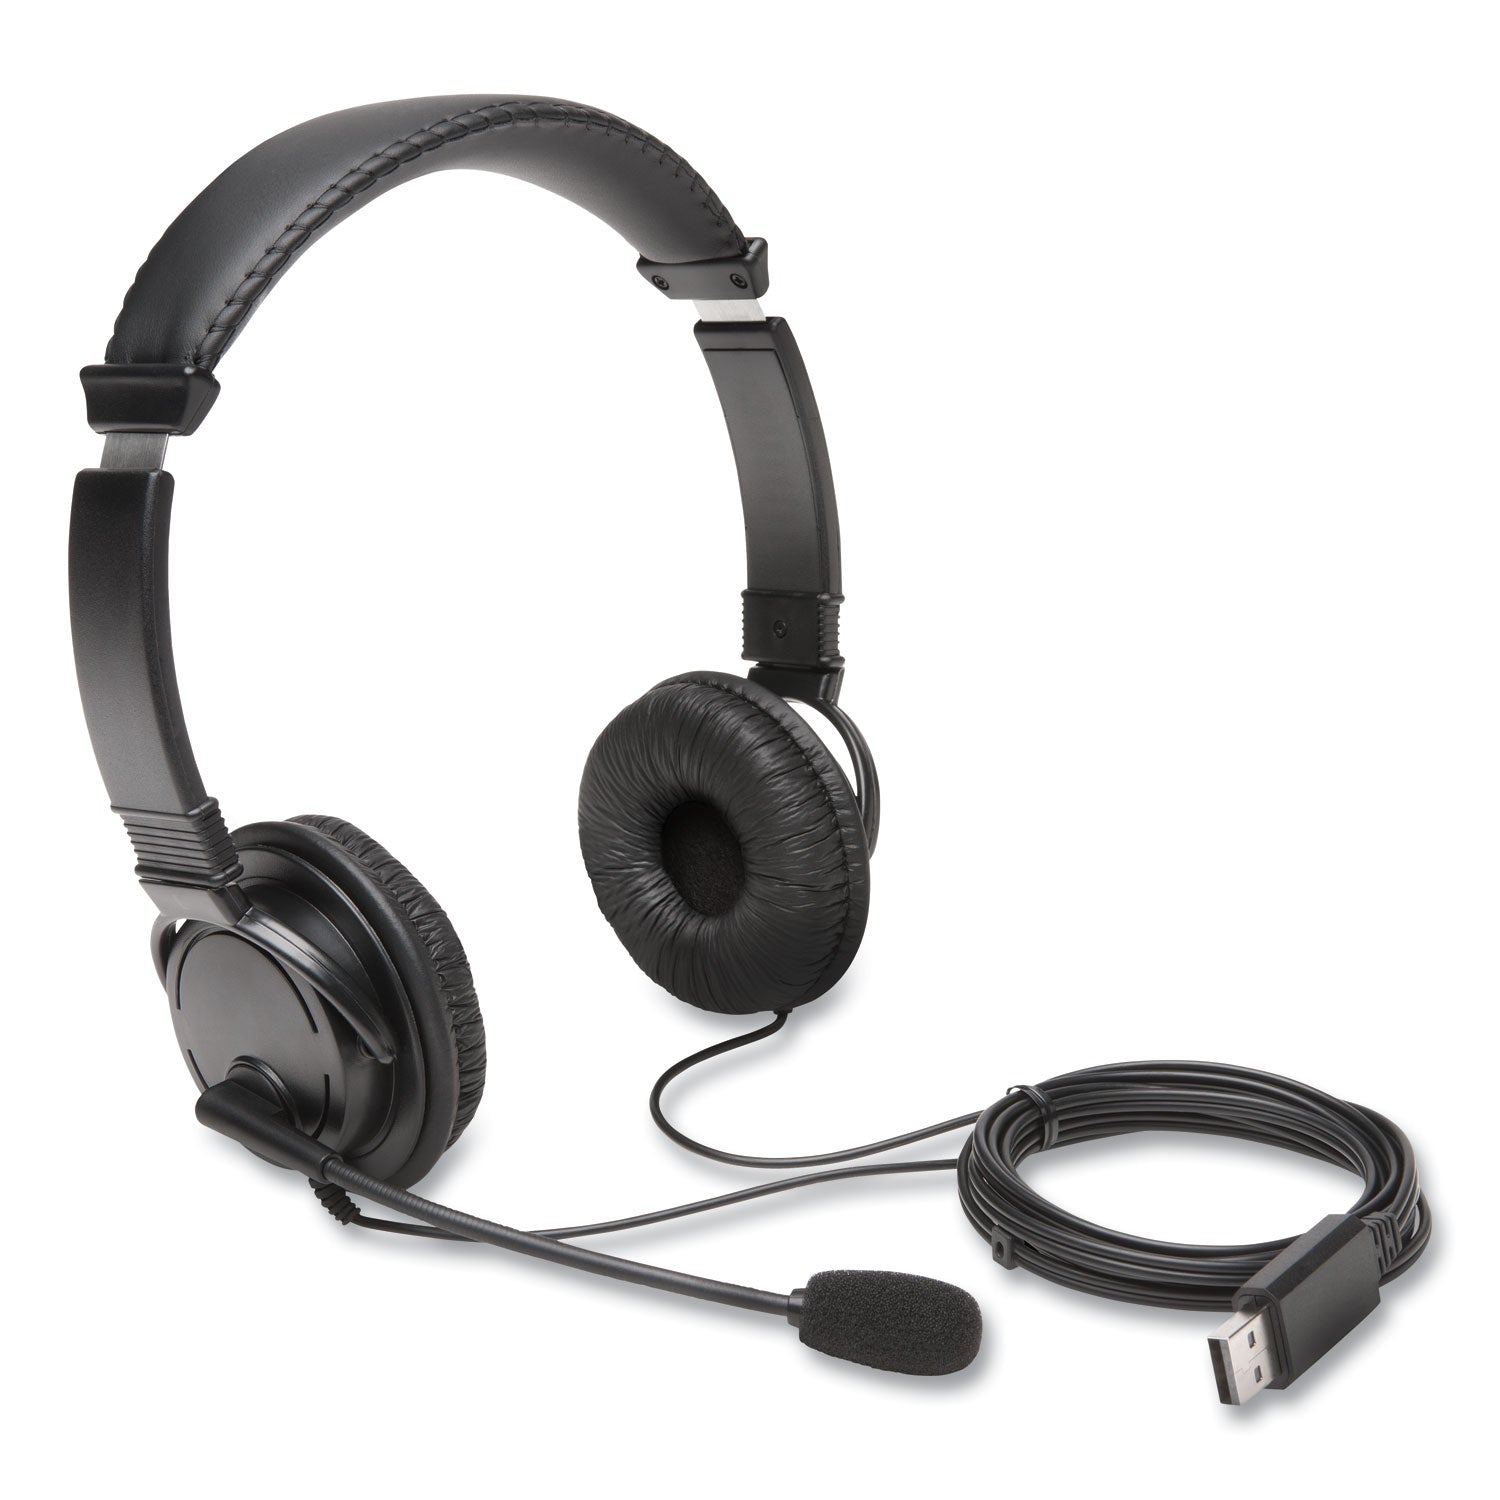 hi-fi-headphones-with-microphone-6-ft-cord-black_kmwk97601ww - 1